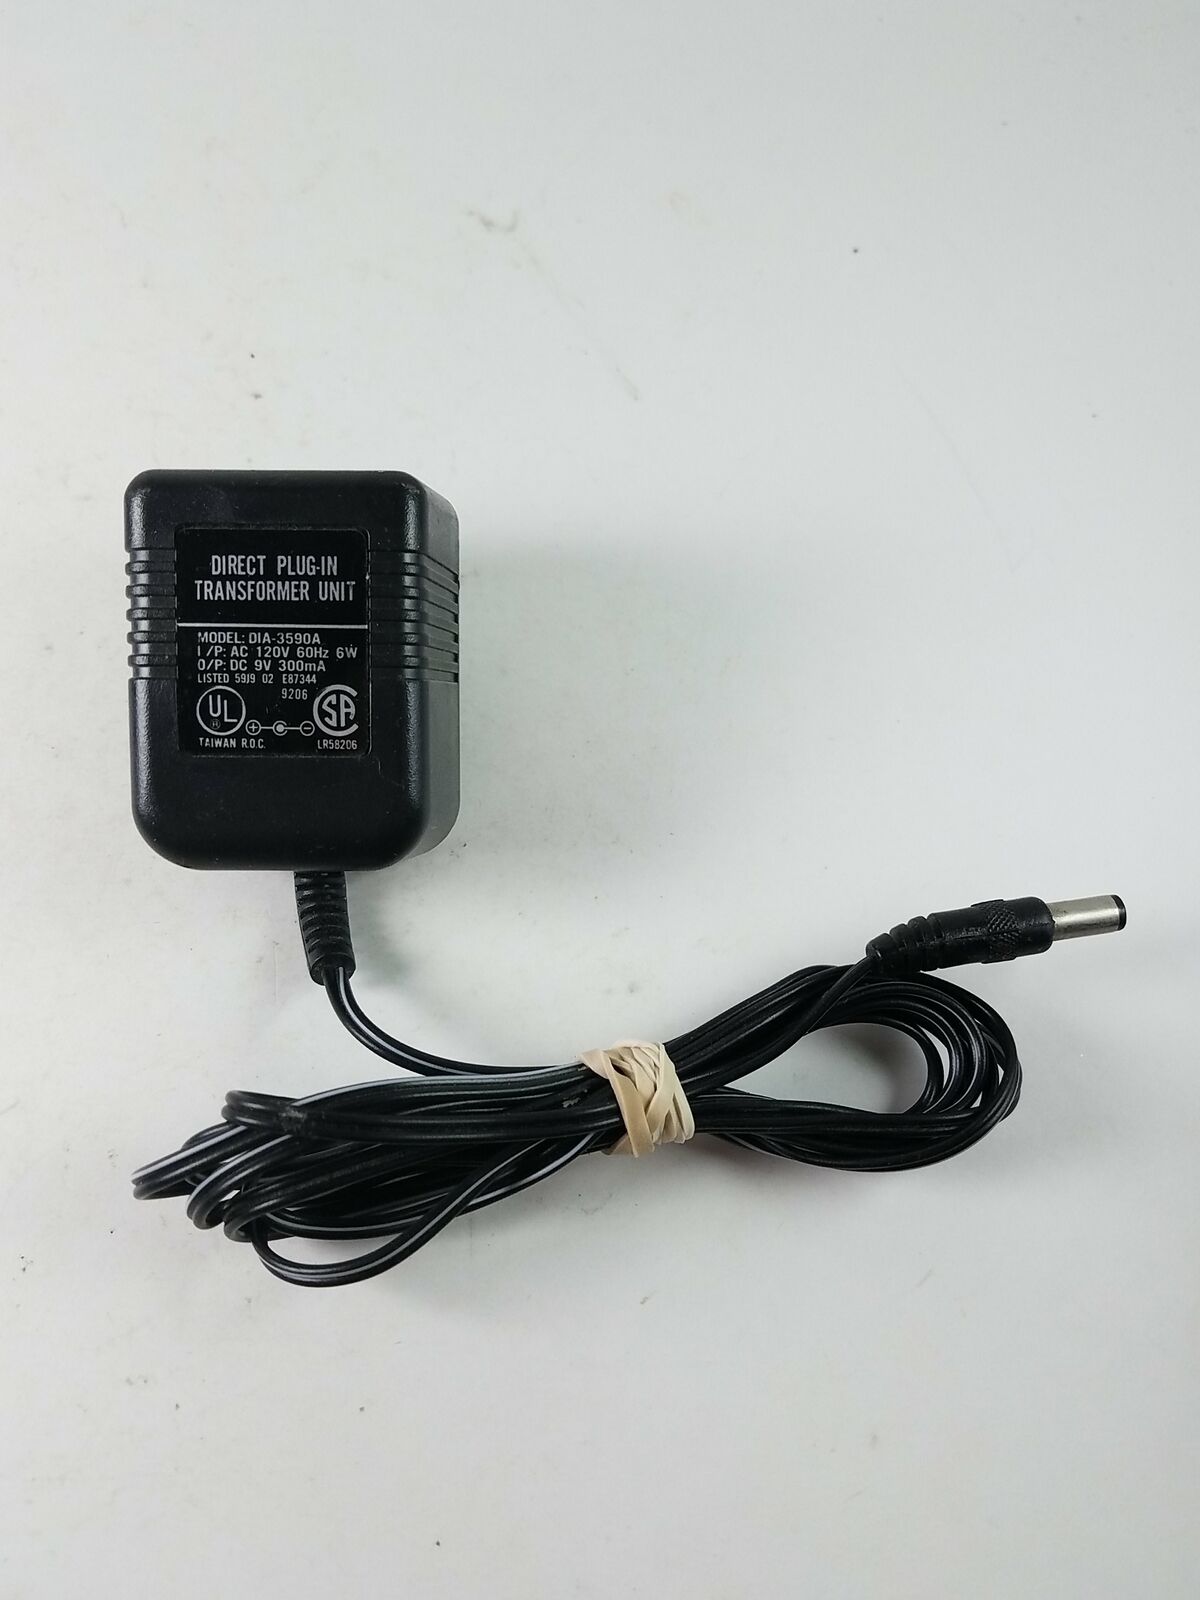 NEW Direct Plug-In Transformer Unit Model DIA-3590A 9VDC 300mA ac adapter